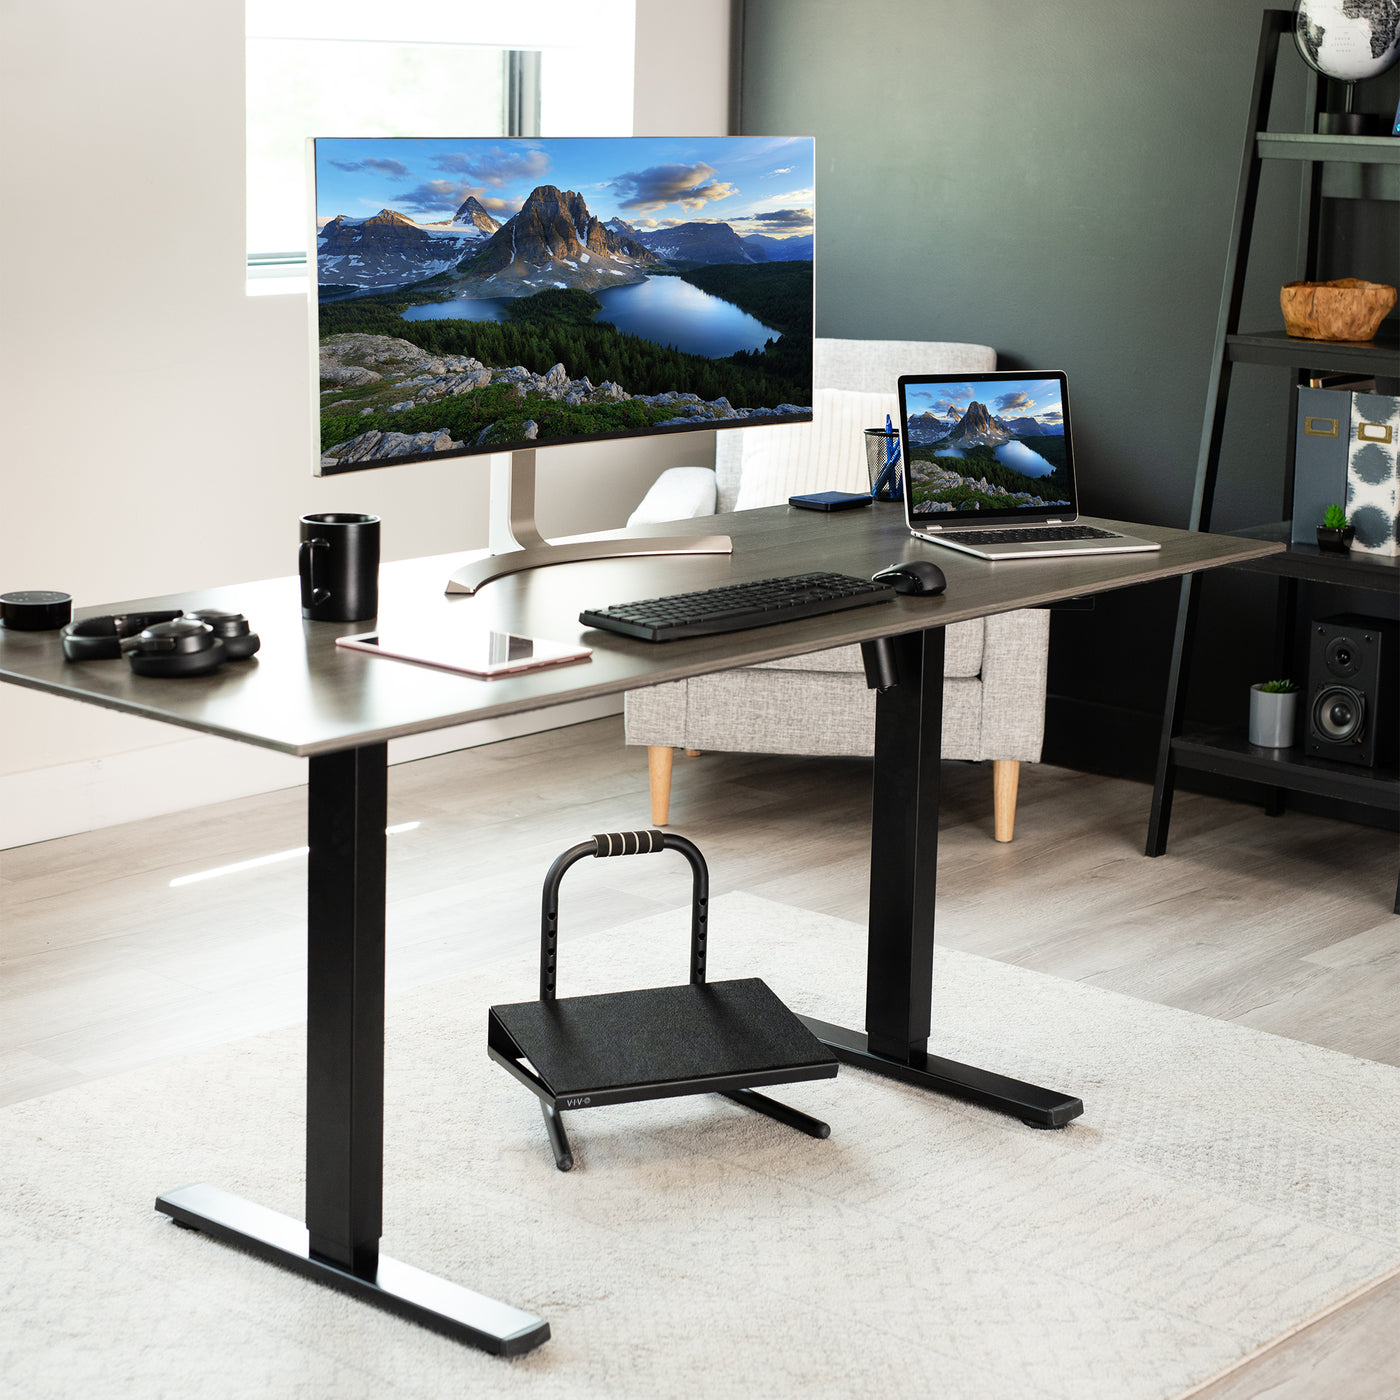 Black footrest under an electric desk in a modern workspace.